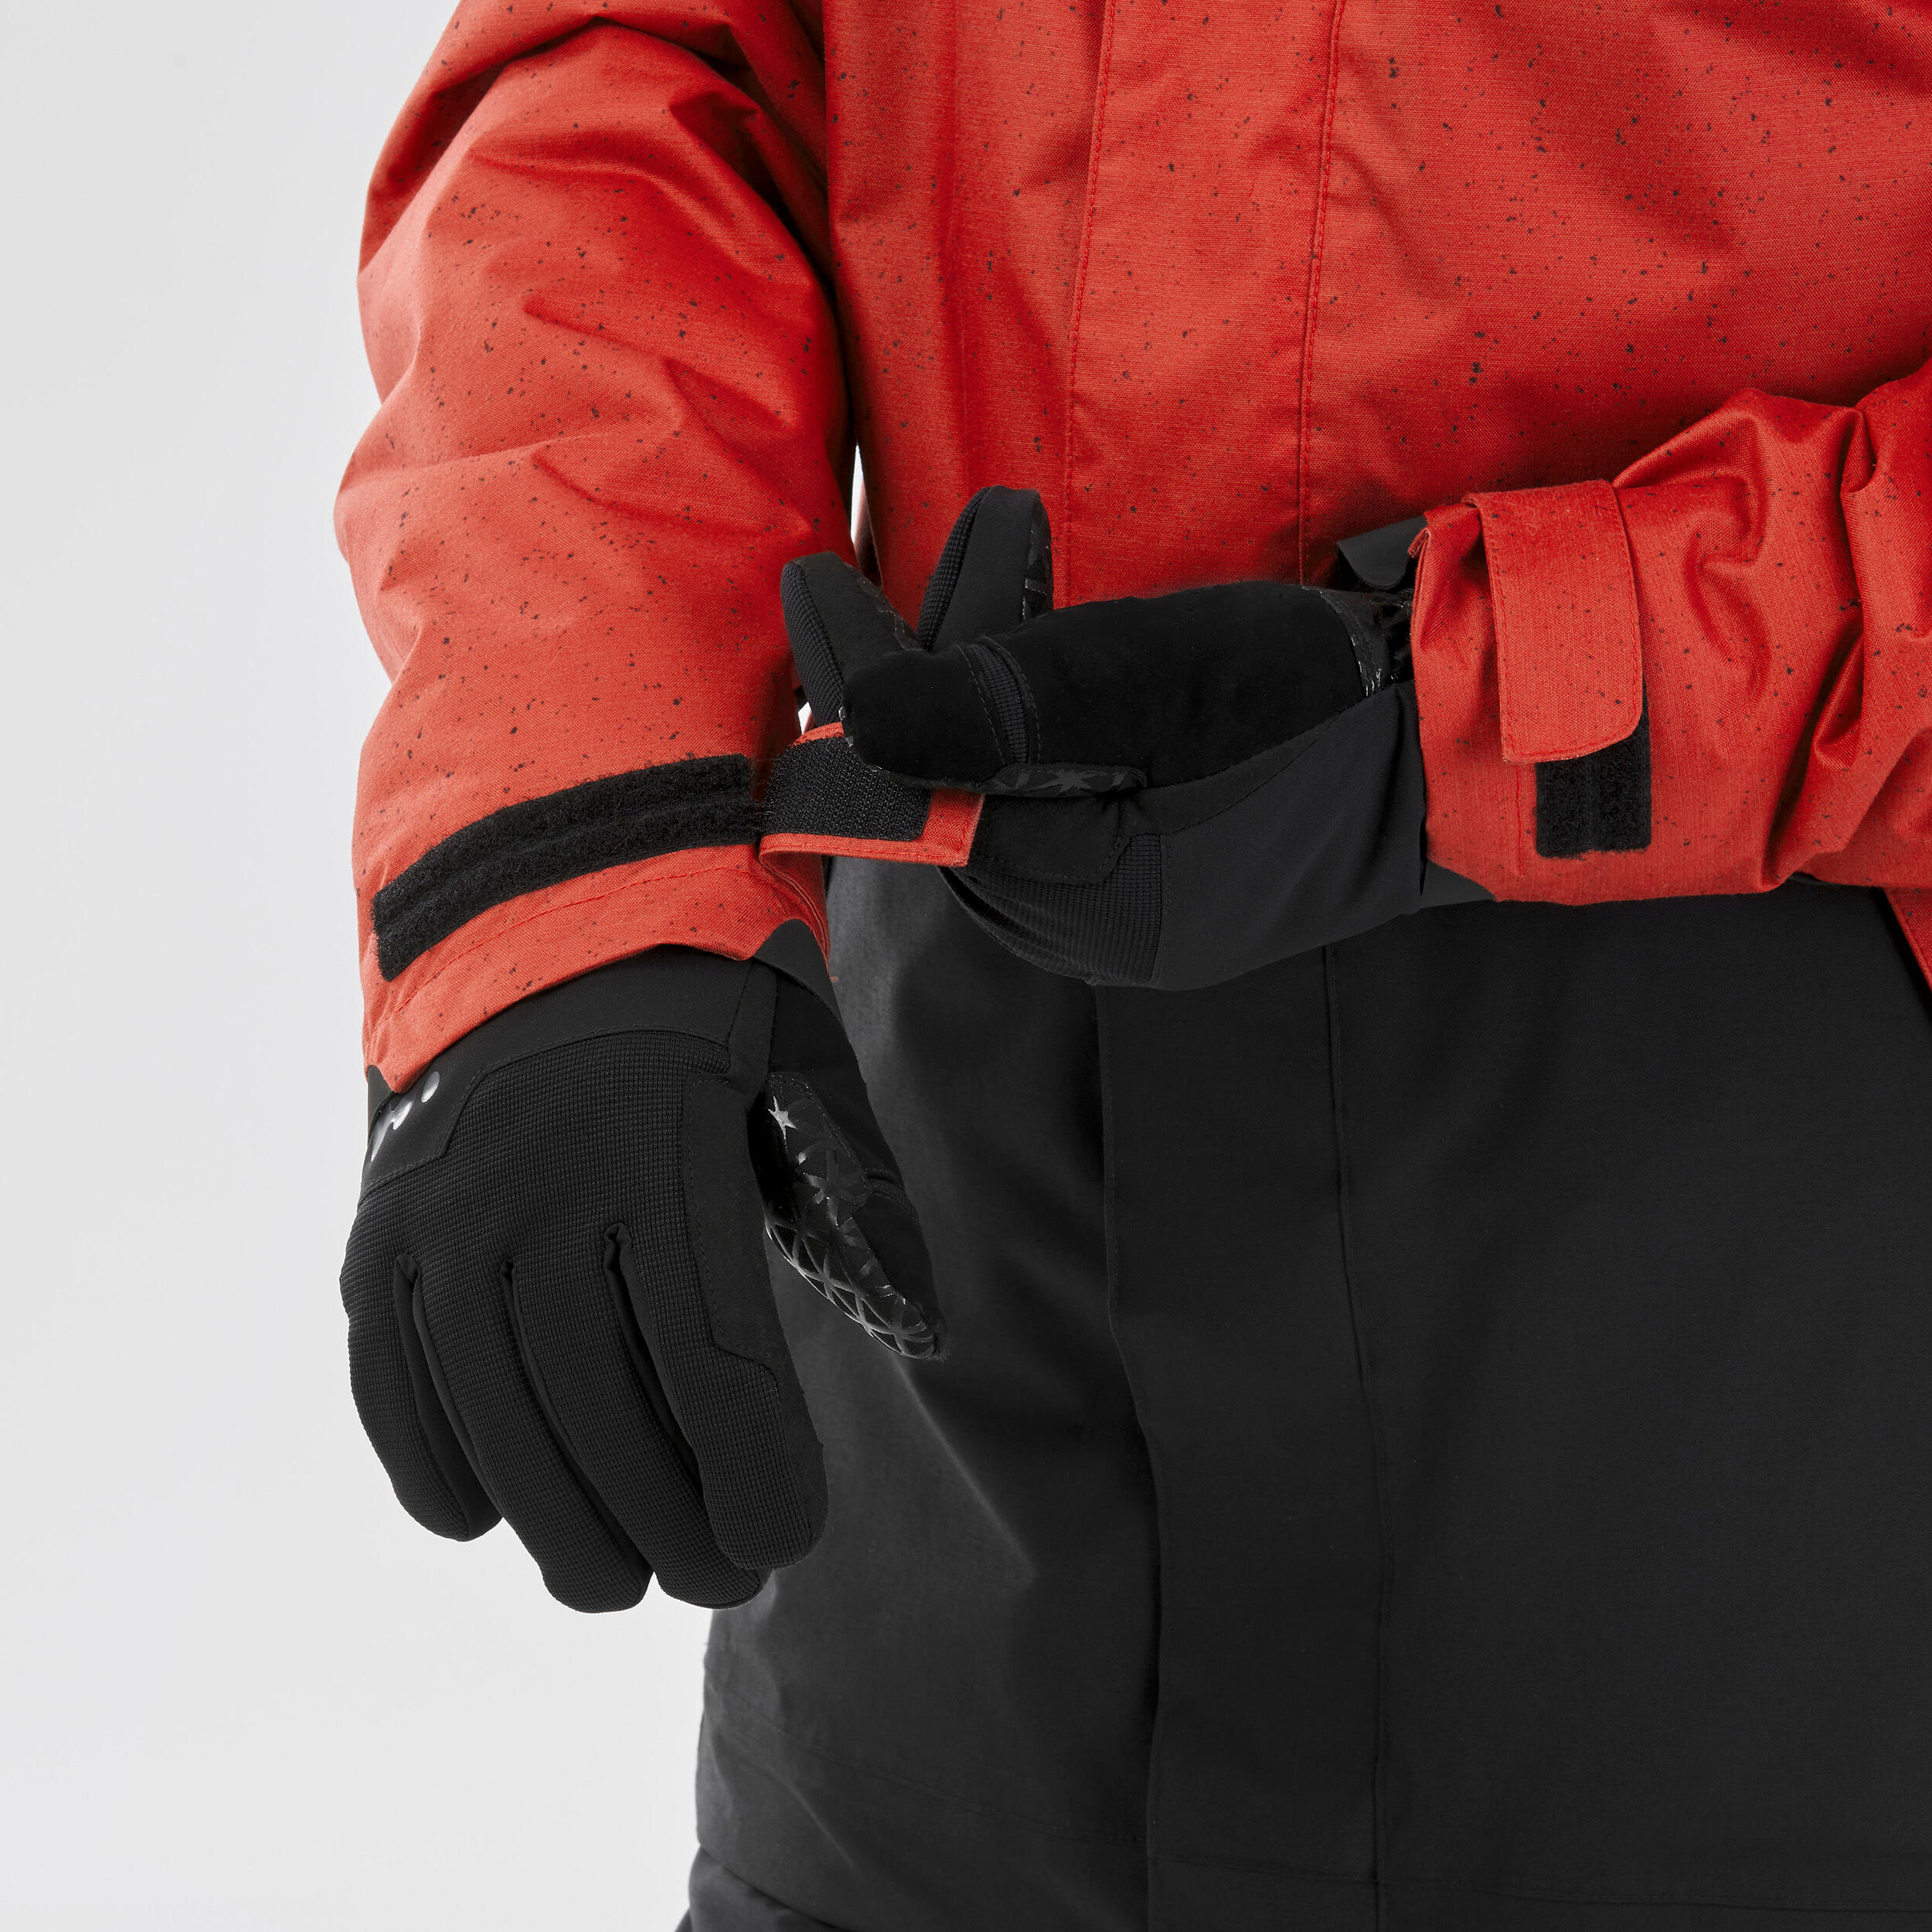 Men's Snowboard Jacket - SNB 100 Red 6/13